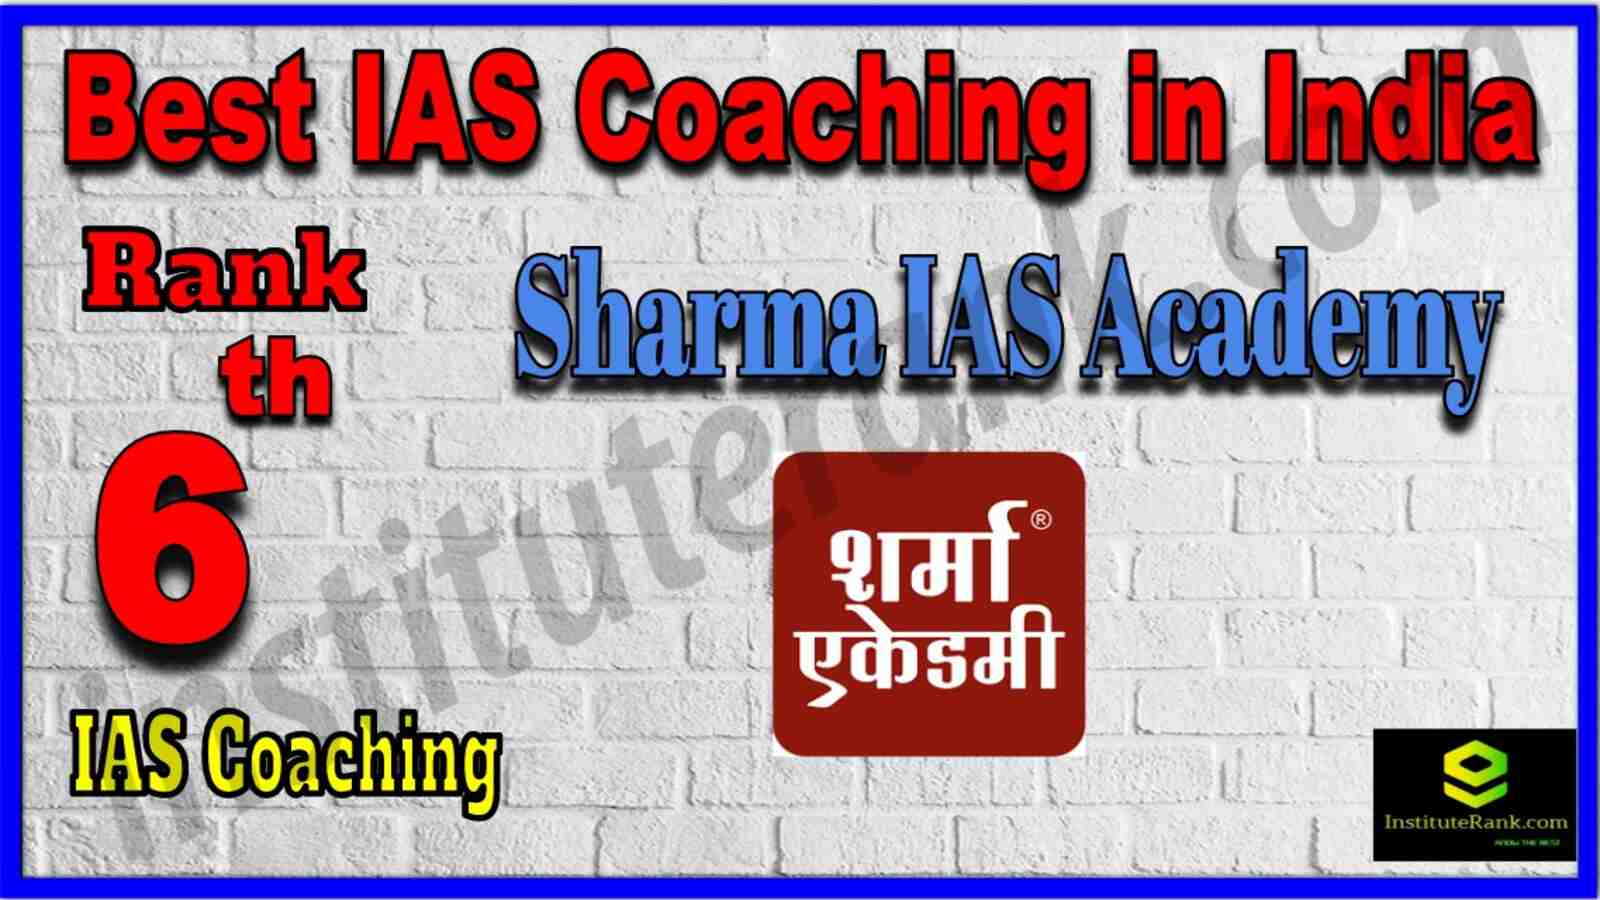 Rank 6 Best IAS coaching in India